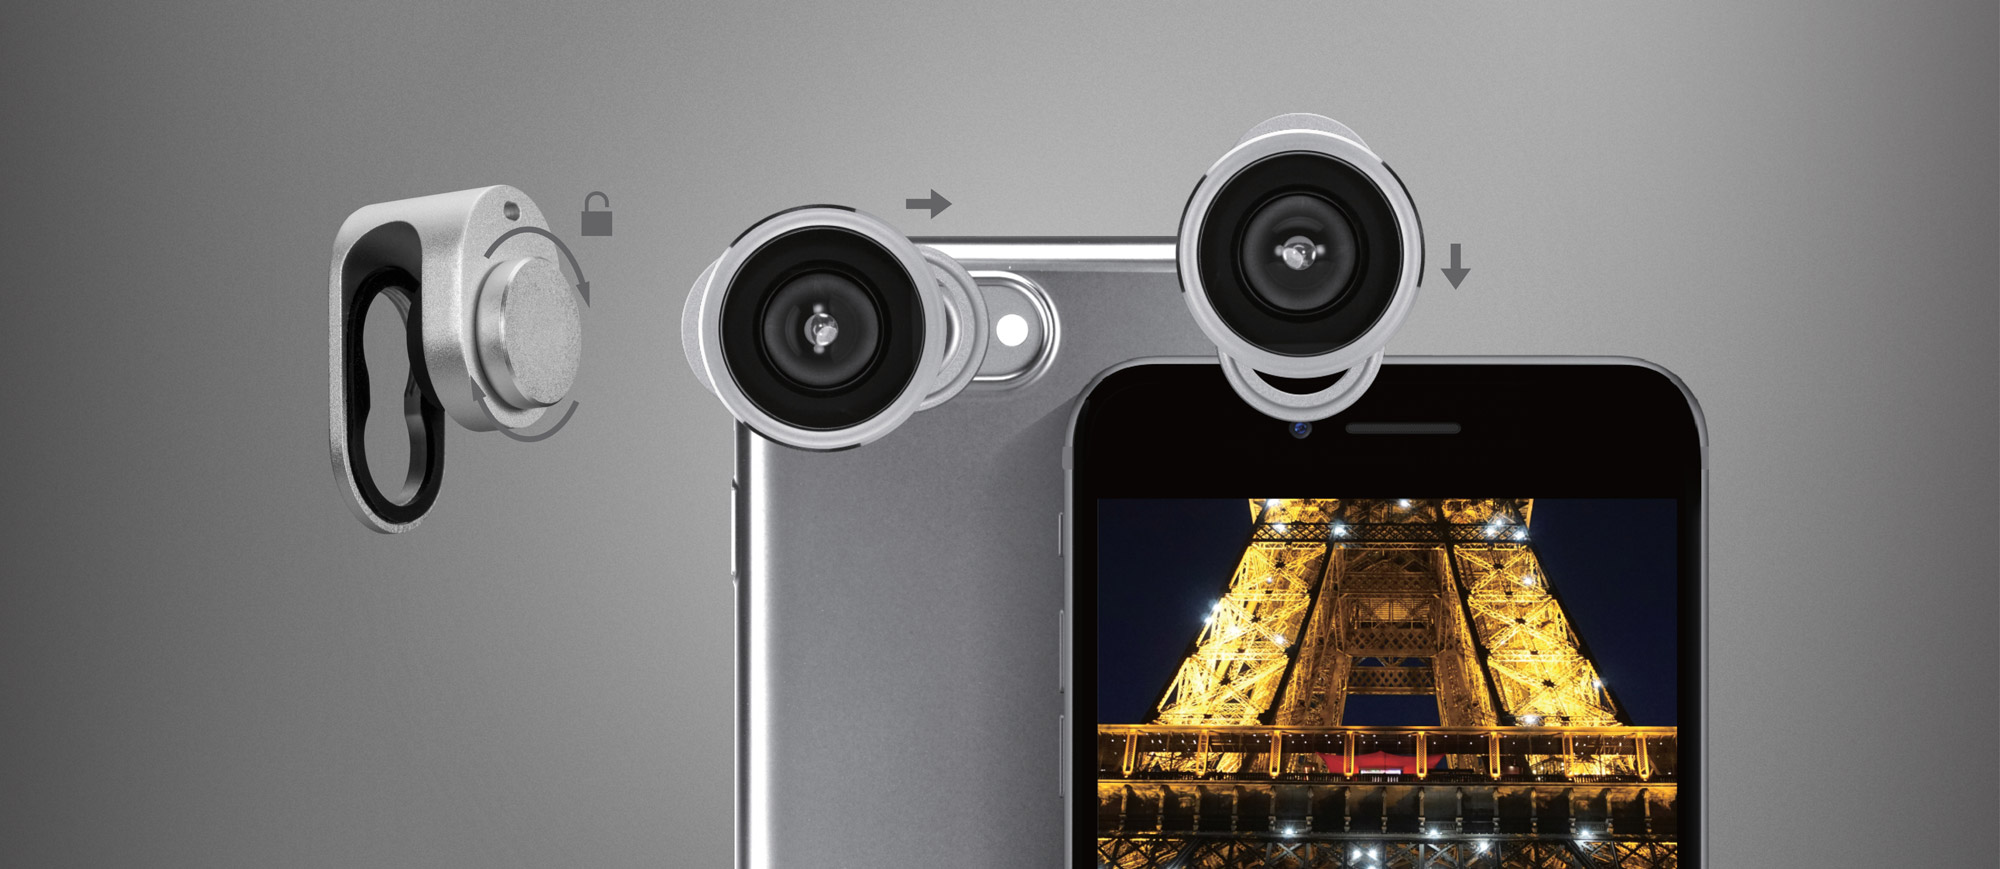 Премиум-набор объективов для смартфона Momax X-Lens Pro Premium Lens Kit 4 in 1